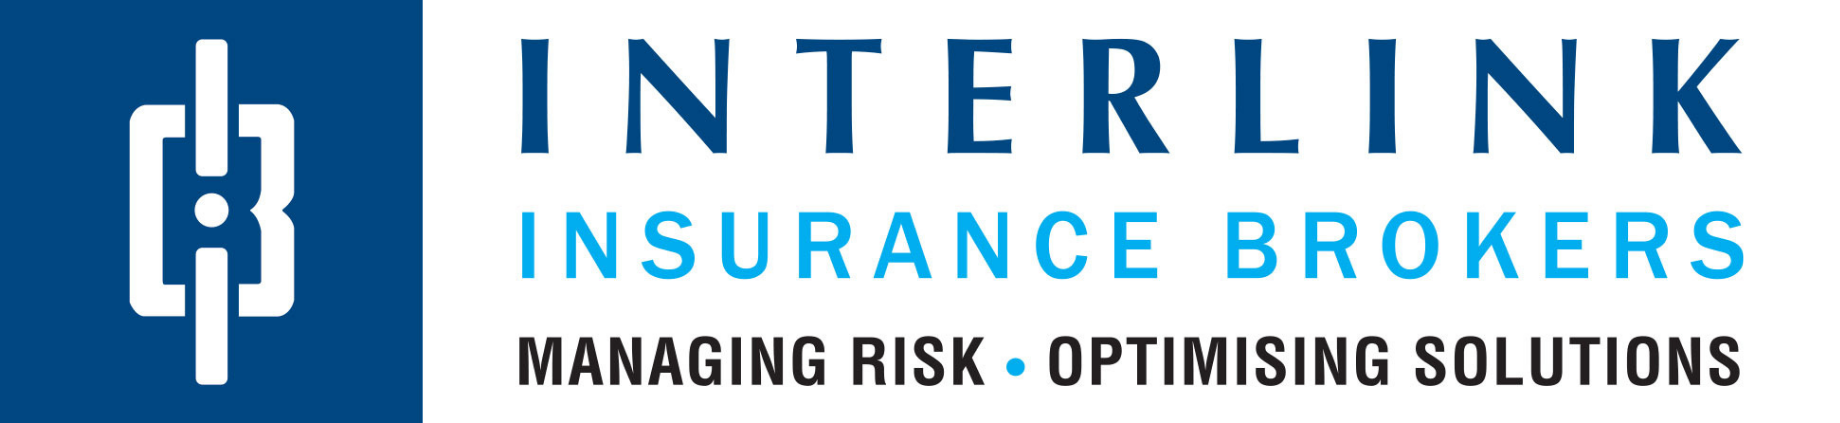 Interlink Insurance Brokers